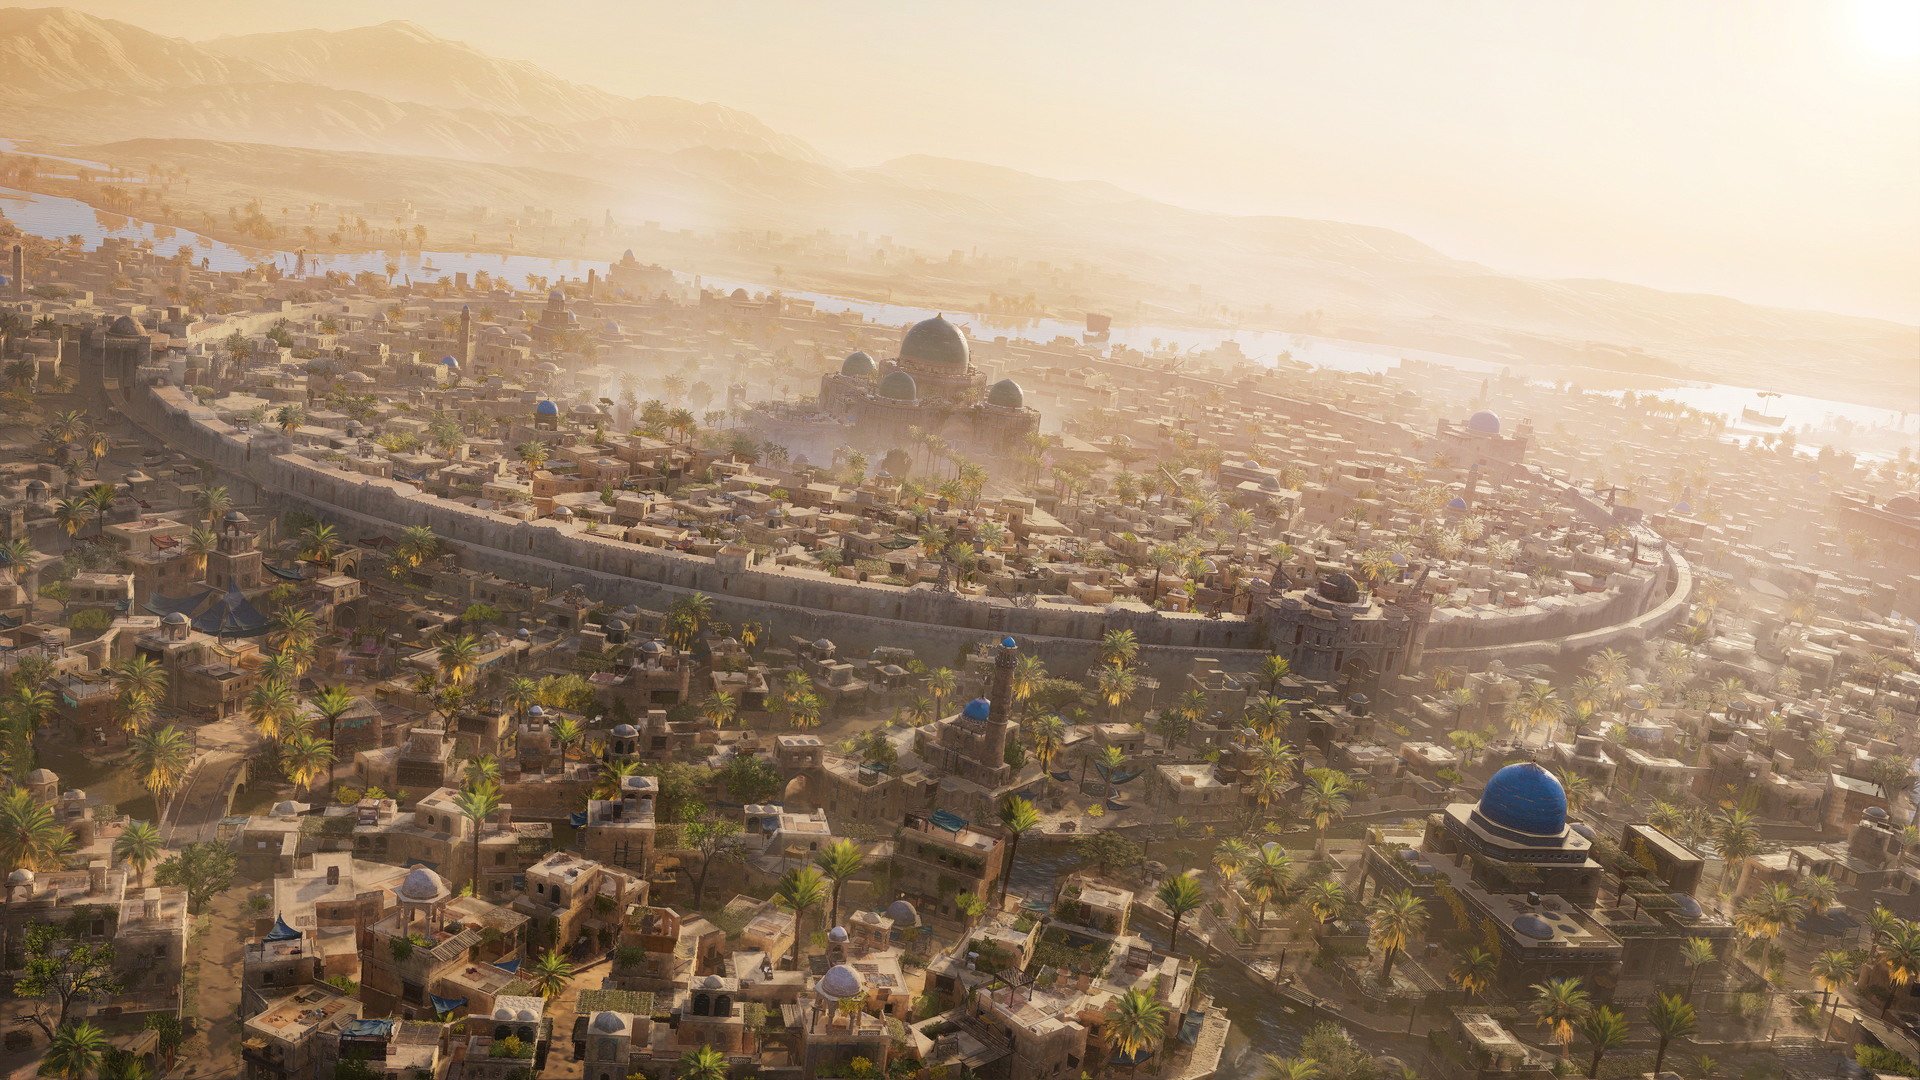 Assassin's Creed: Mirage - screenshot 1